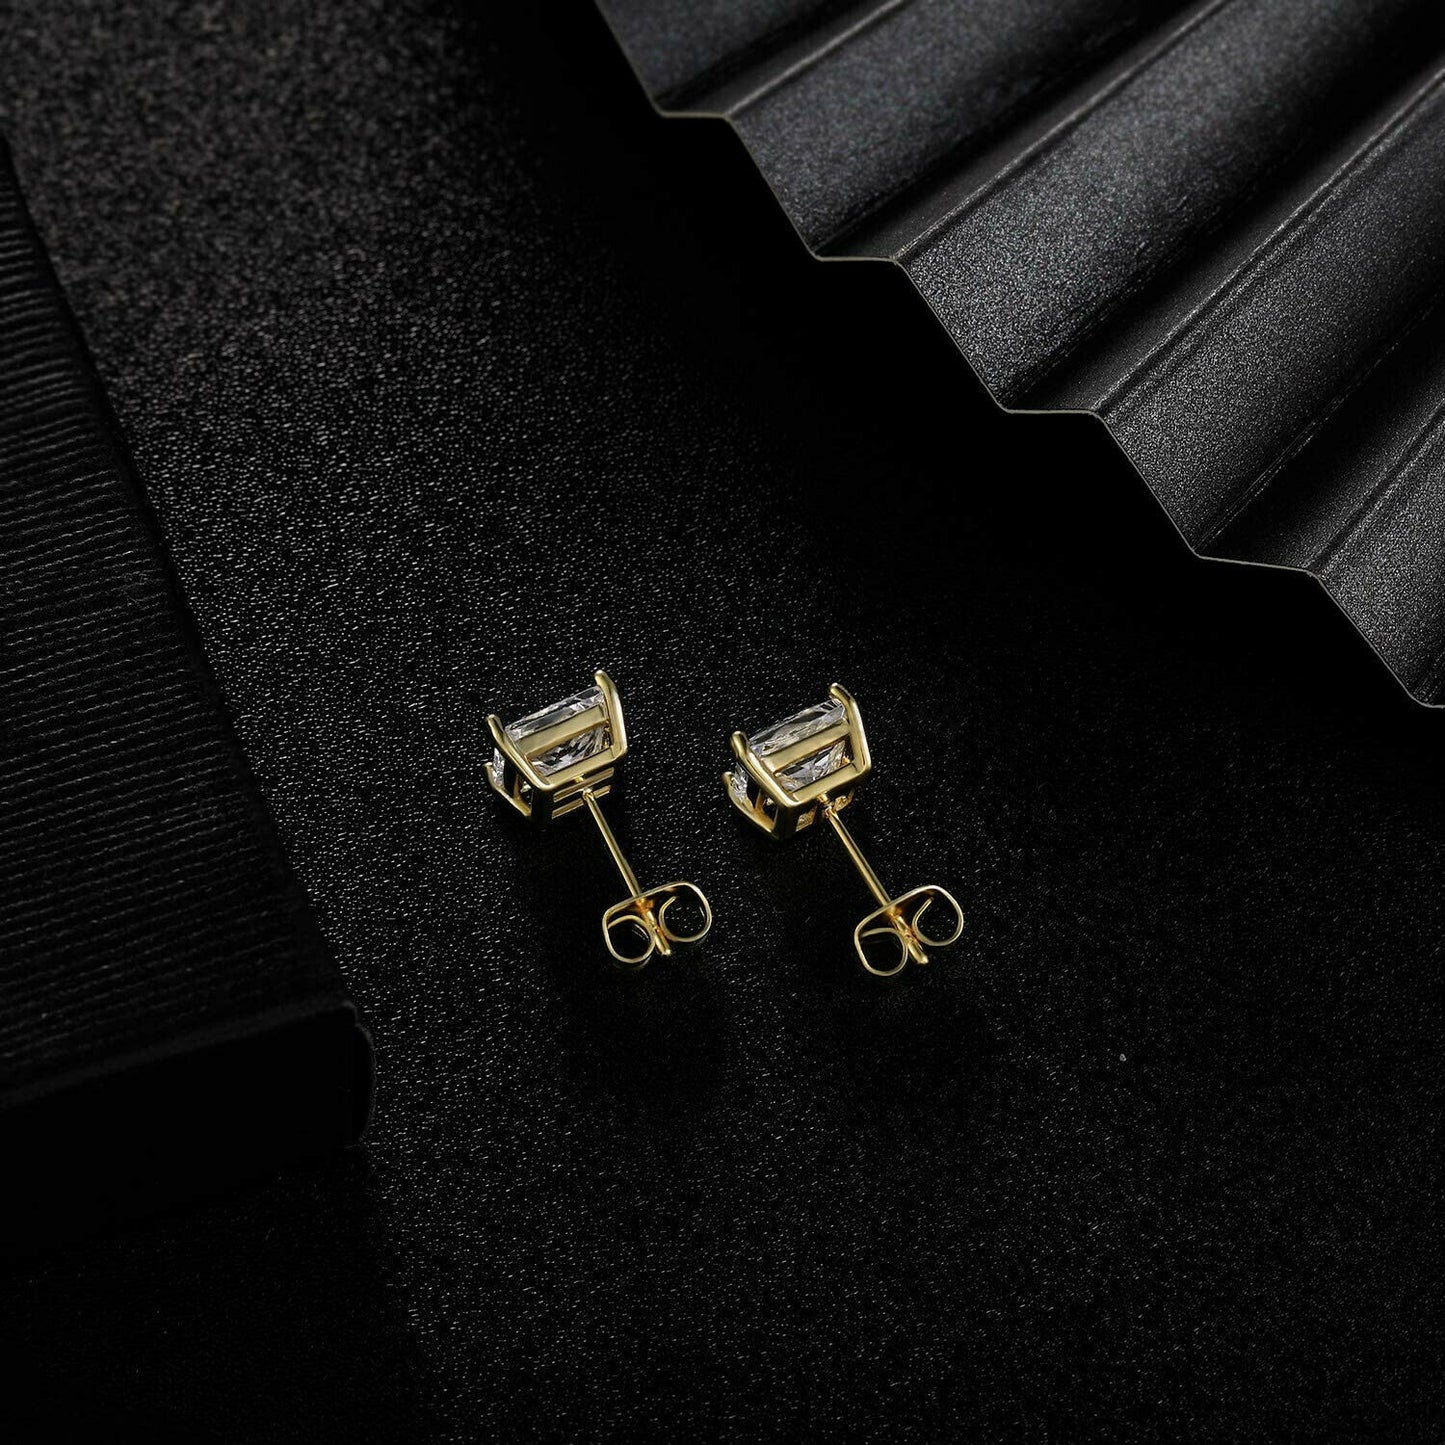 7MM Cubic Zirconia Stud Earrings Gold Plated Square Studs Ear Piercing Jewellery